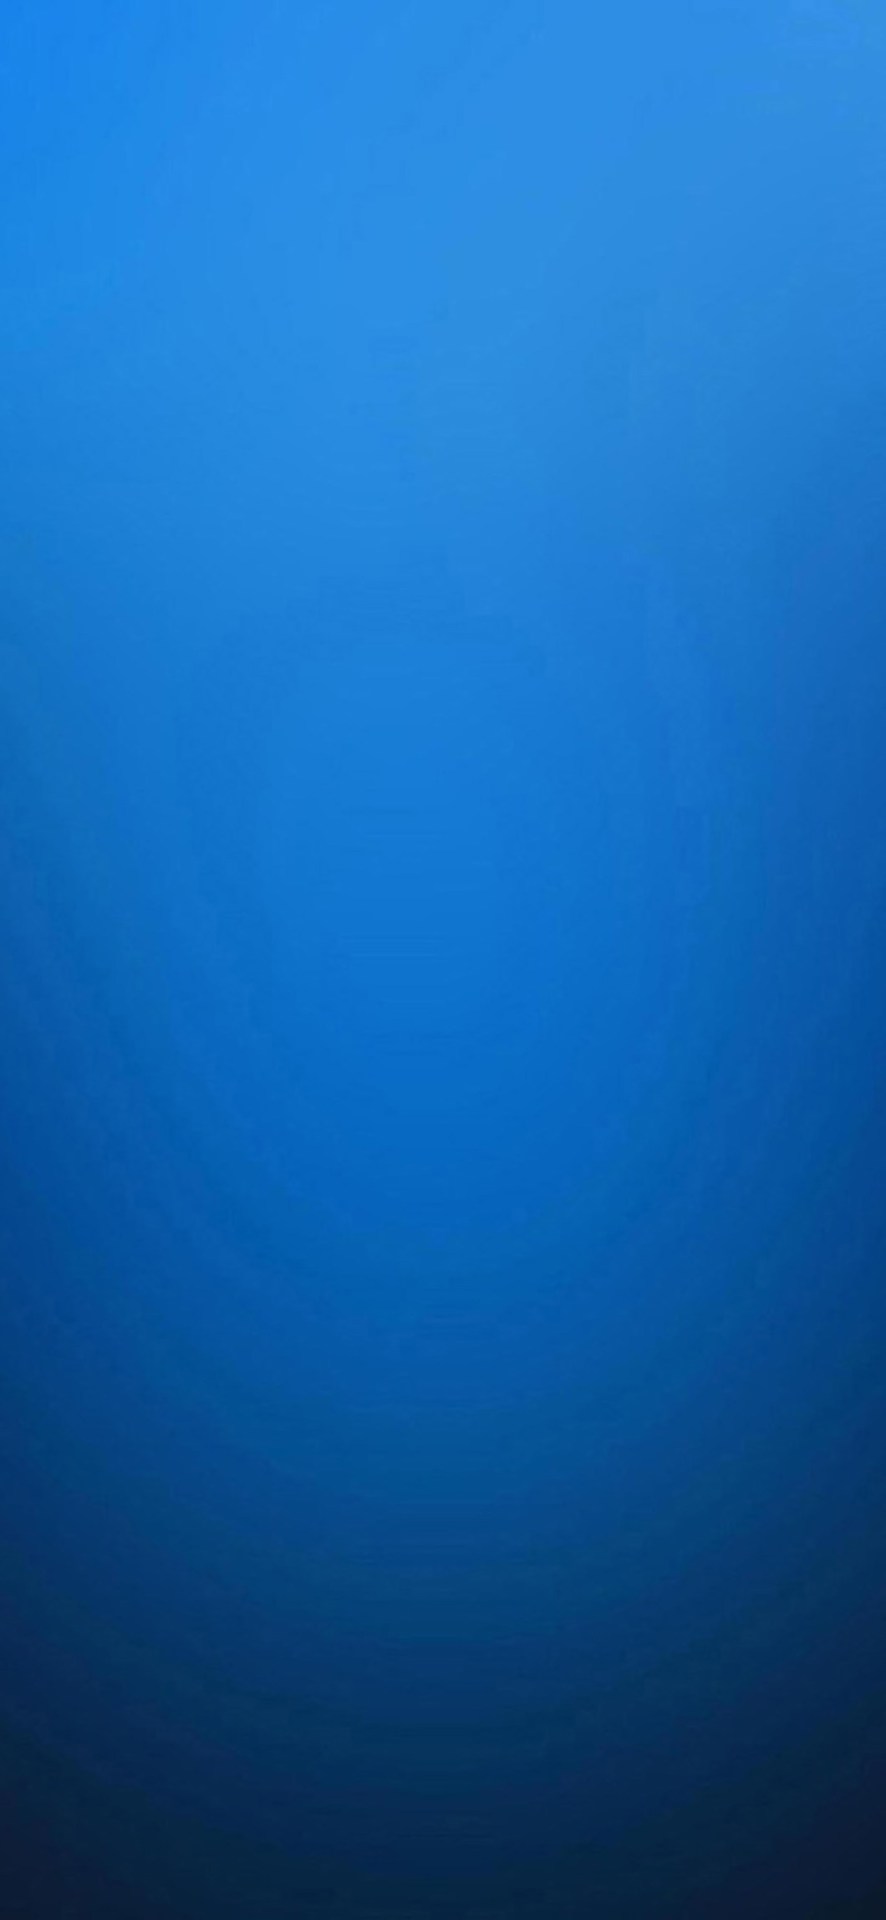 Iphone X Hd Wallpaper Simple Dark Blue Iphone X Hd